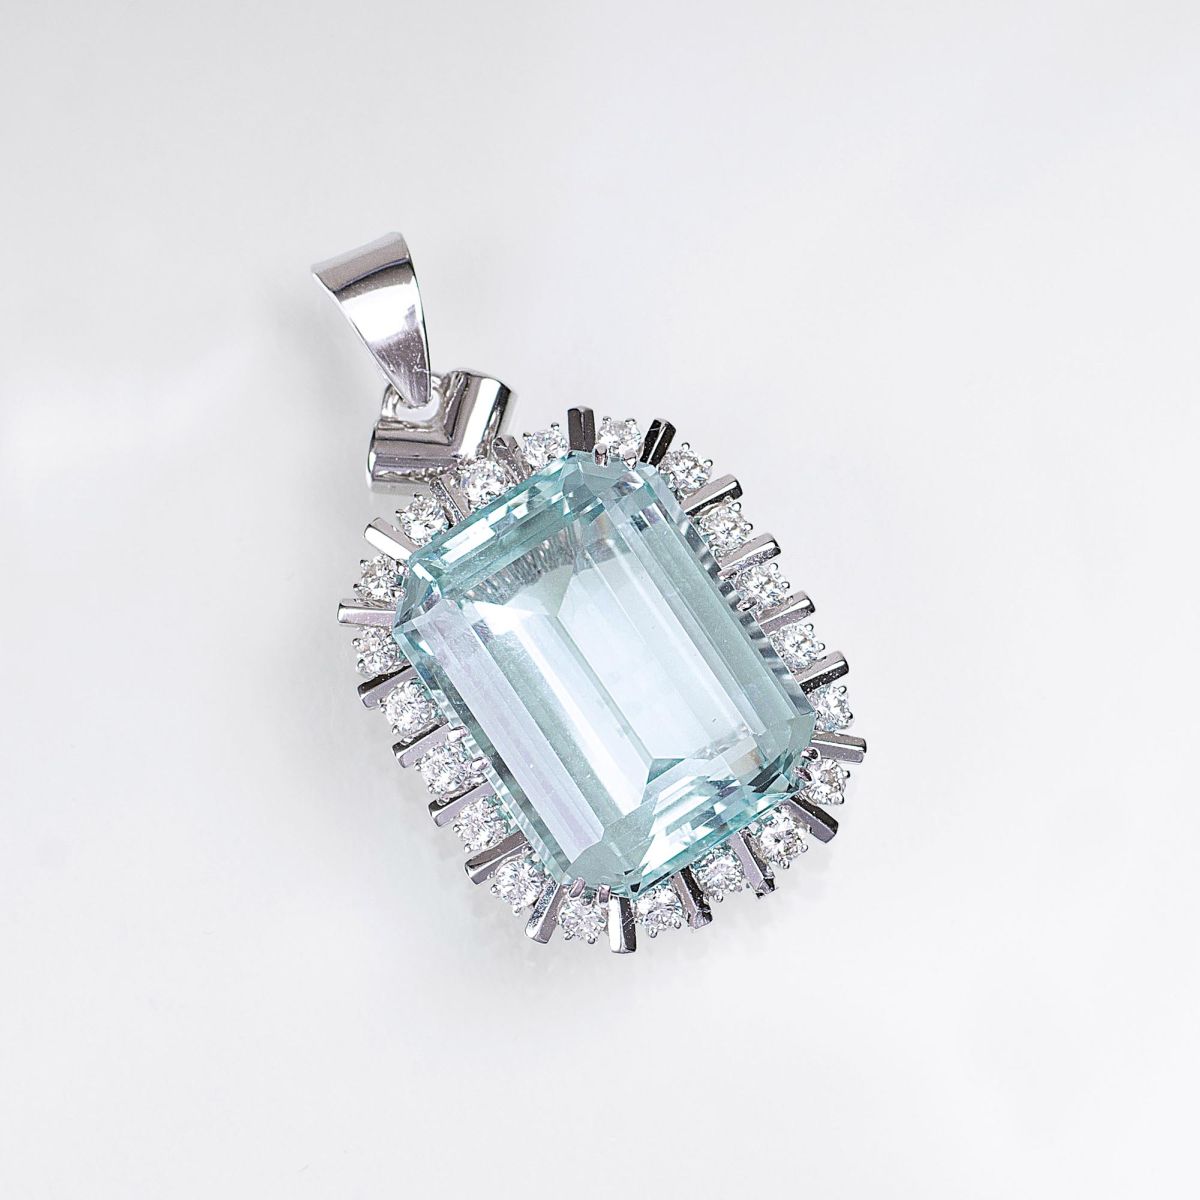 A fine Aquamarin Diamond Pendant